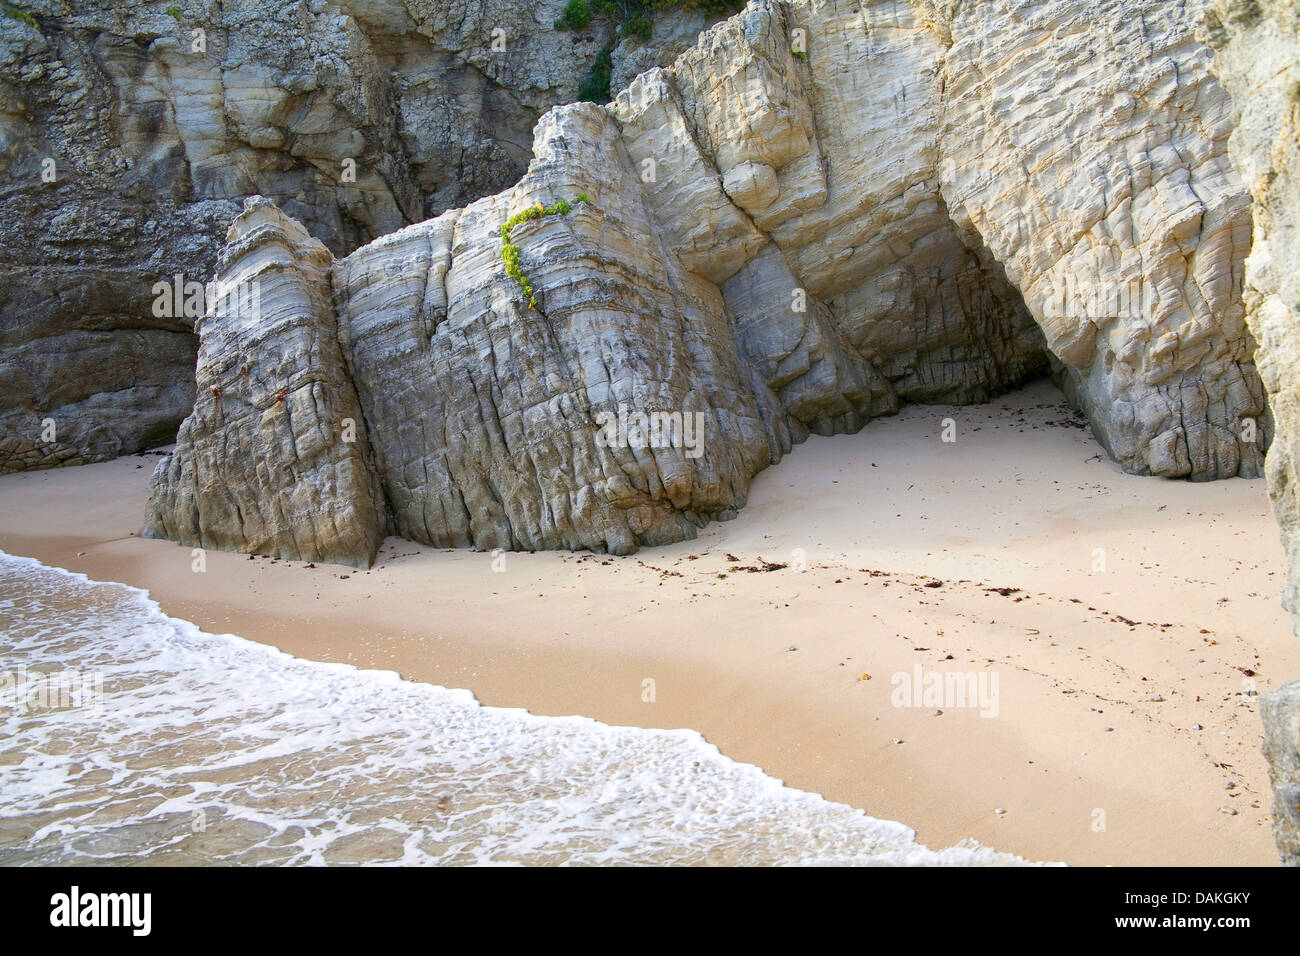 rocky coast with sandy bay, France, Brittany Stock Photo